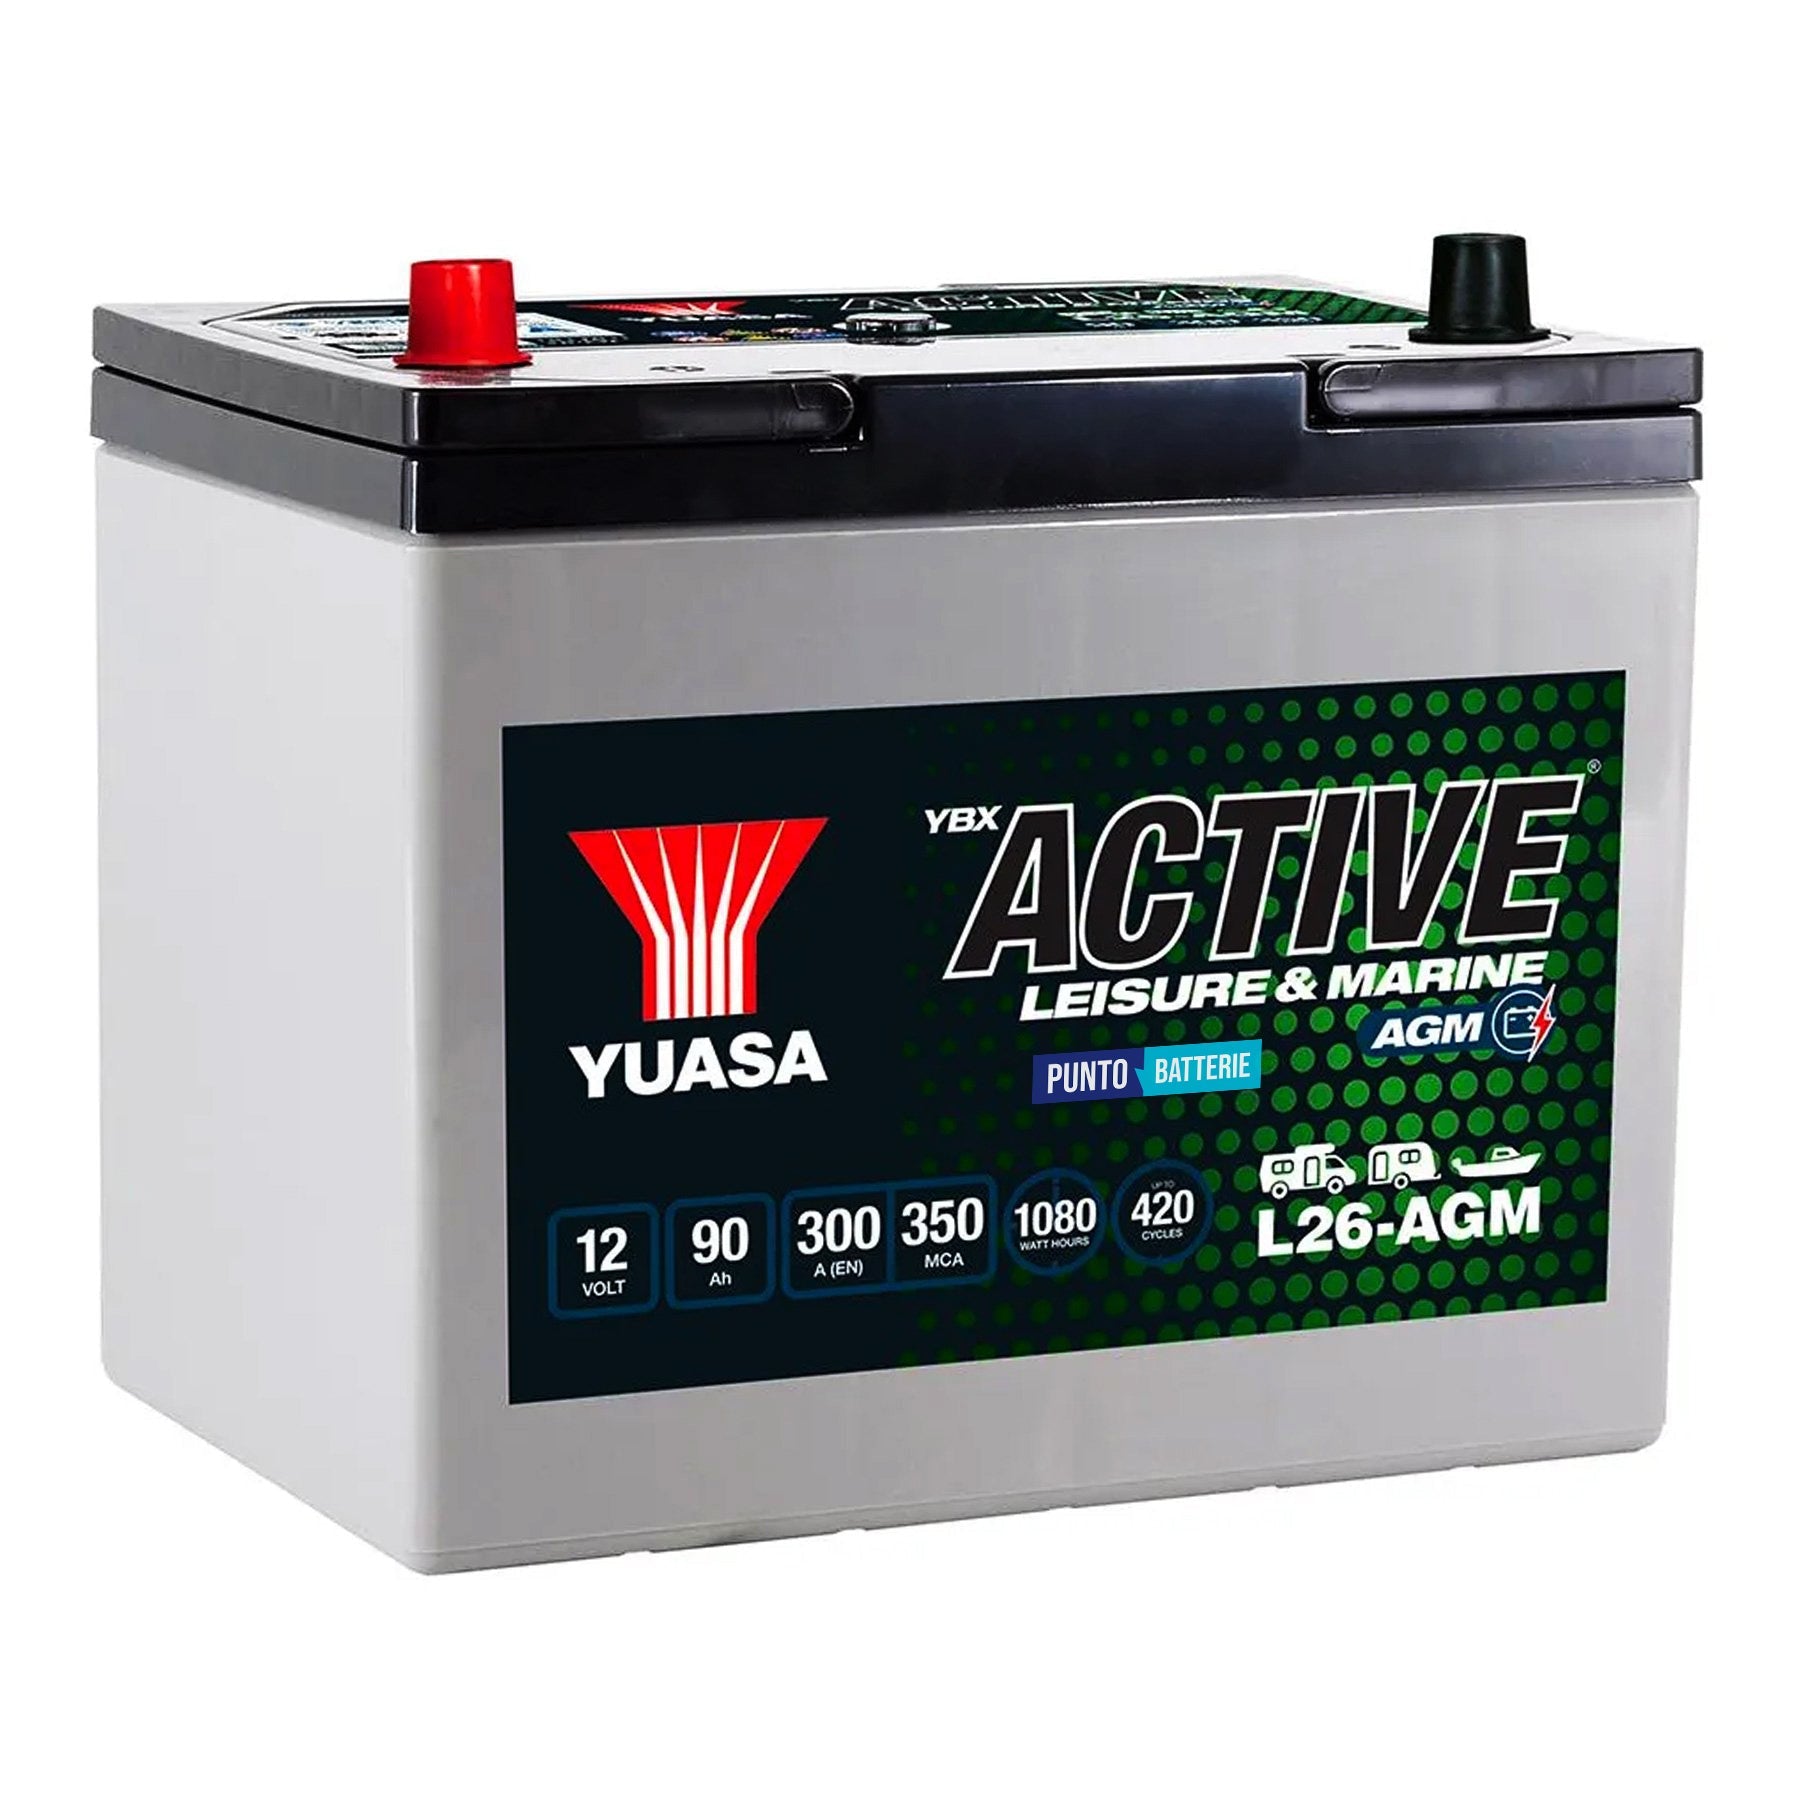 Batteria originale Yuasa YBX ACTIVE Leisure e Marine L26-AGM, dimensioni 259 x 168 x 236, 12 volt, 90 amperora, AGM. Batteria per servizi di camper, barca e applicazioni a scarica lenta.